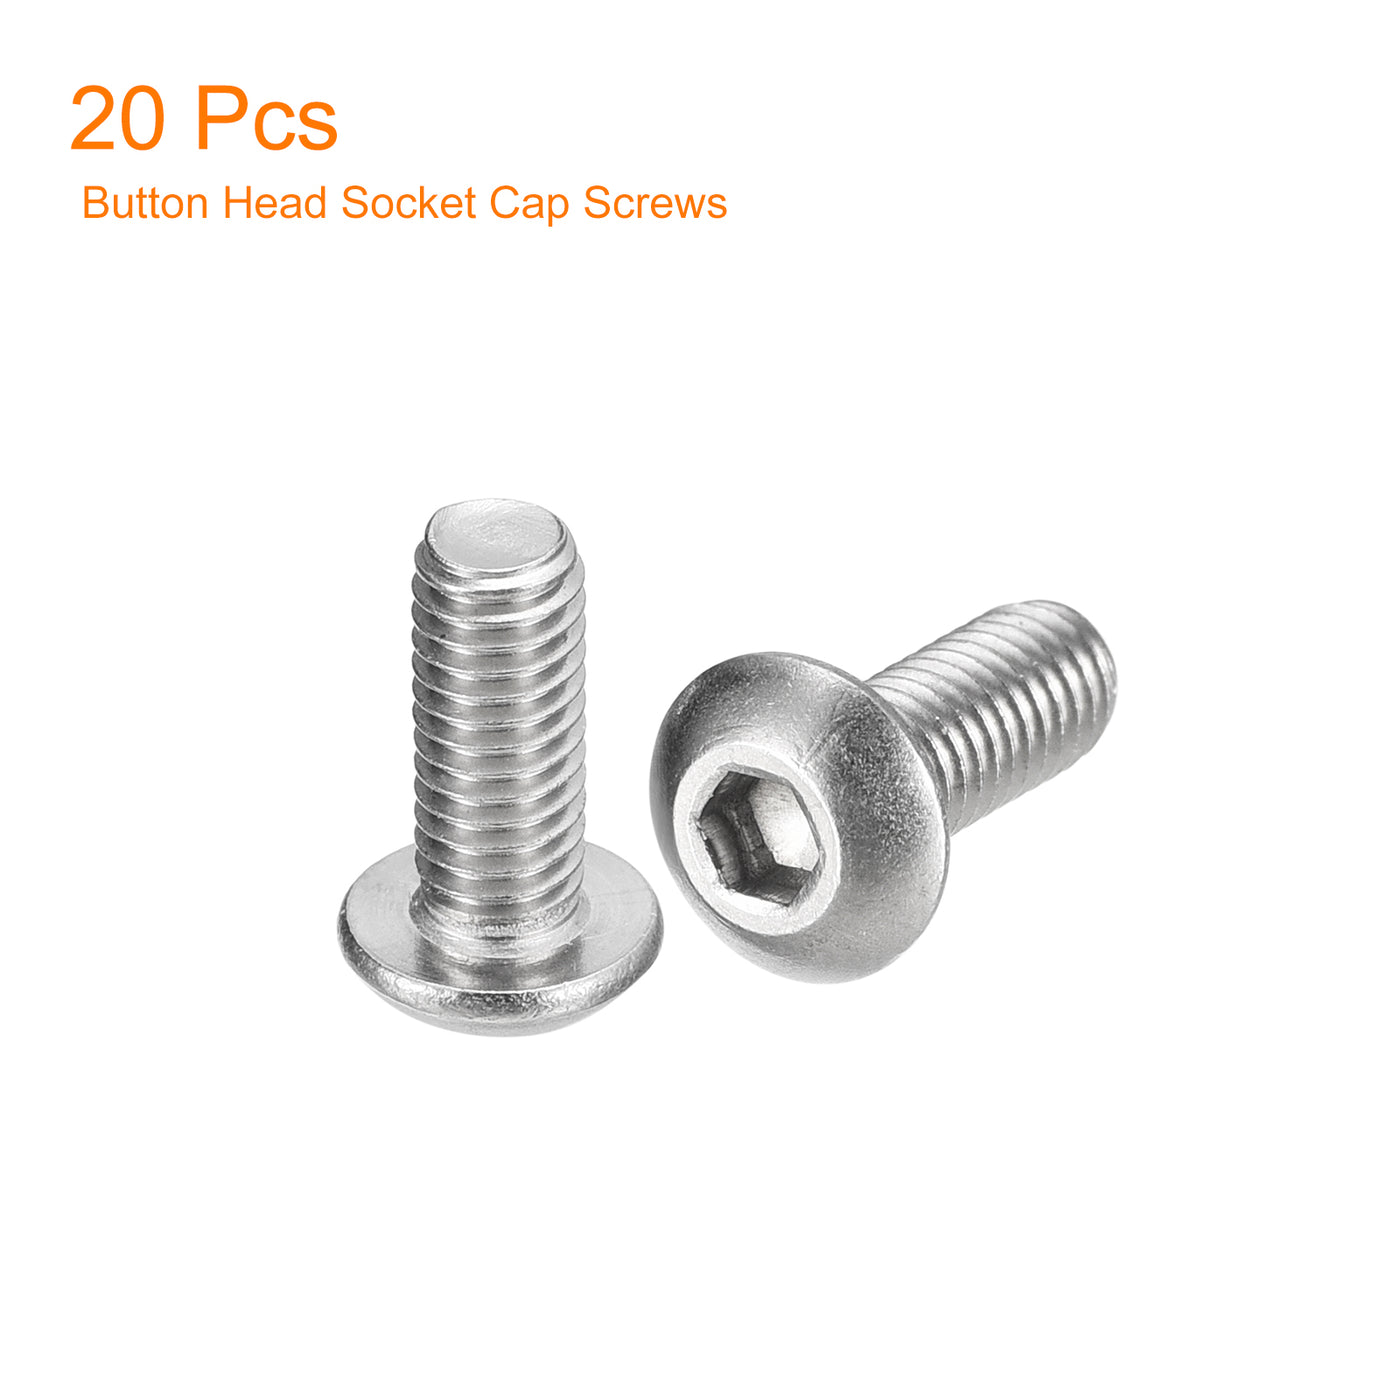 uxcell Uxcell #10-32x1/2" Button Head Socket Cap Screws, 20pcs 304 Stainless Steel Screws